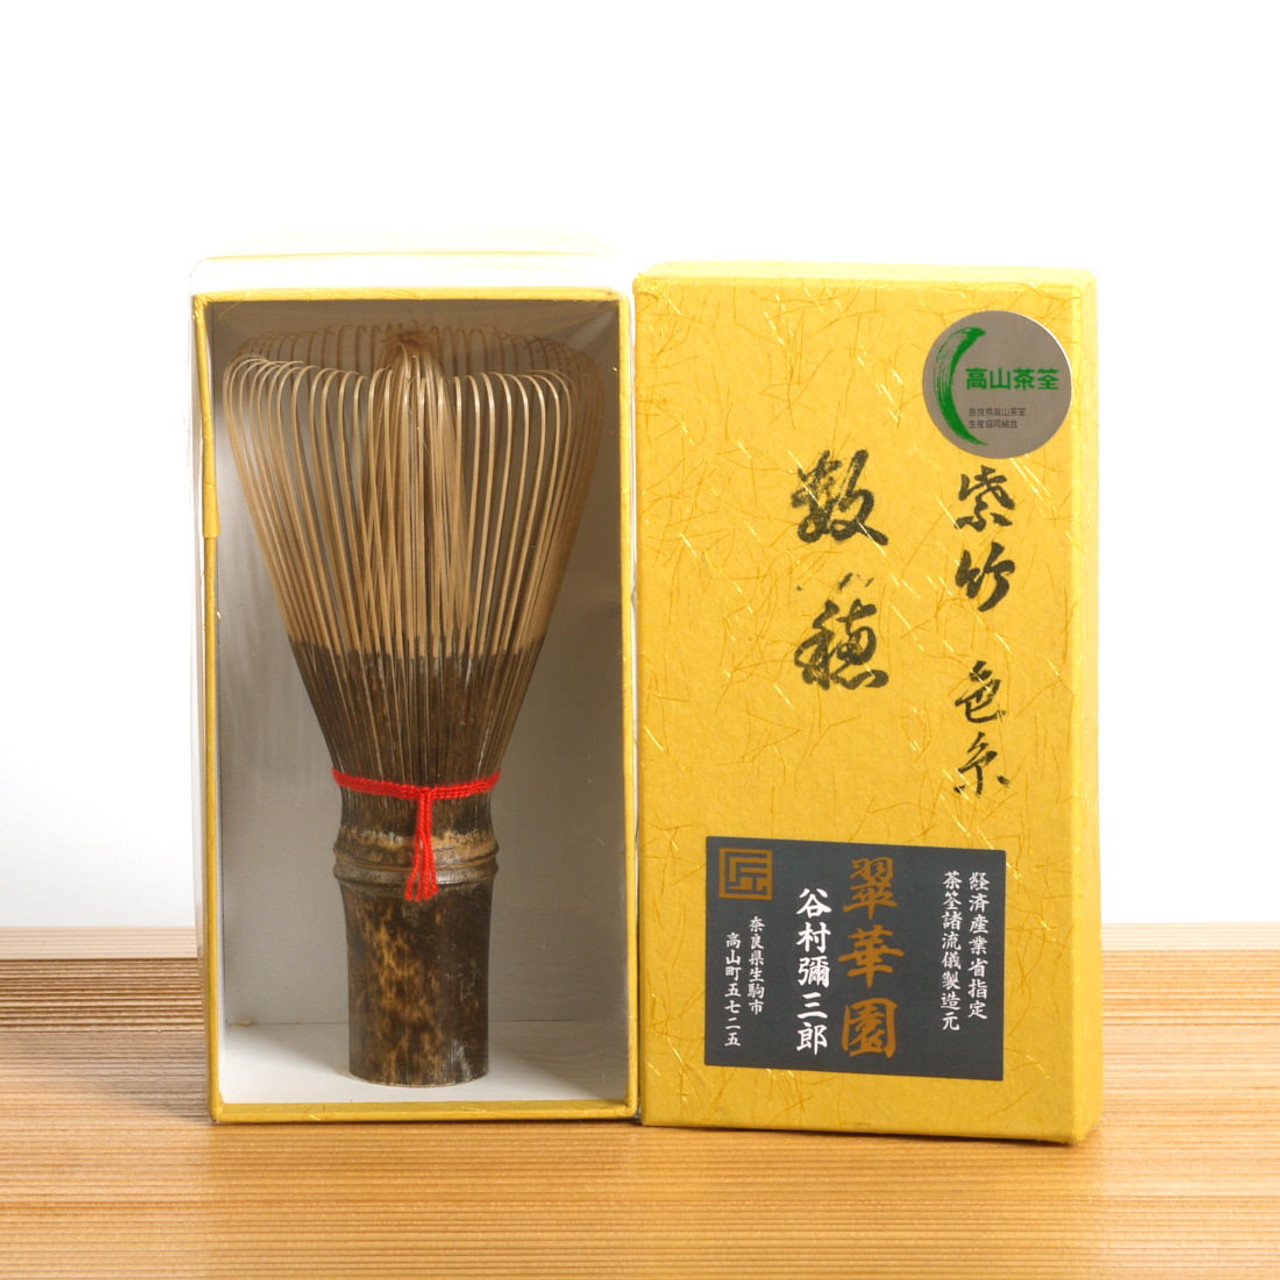 Hojicha Whisk - Black Bamboo Takayama Chasen – Hojicha Co.